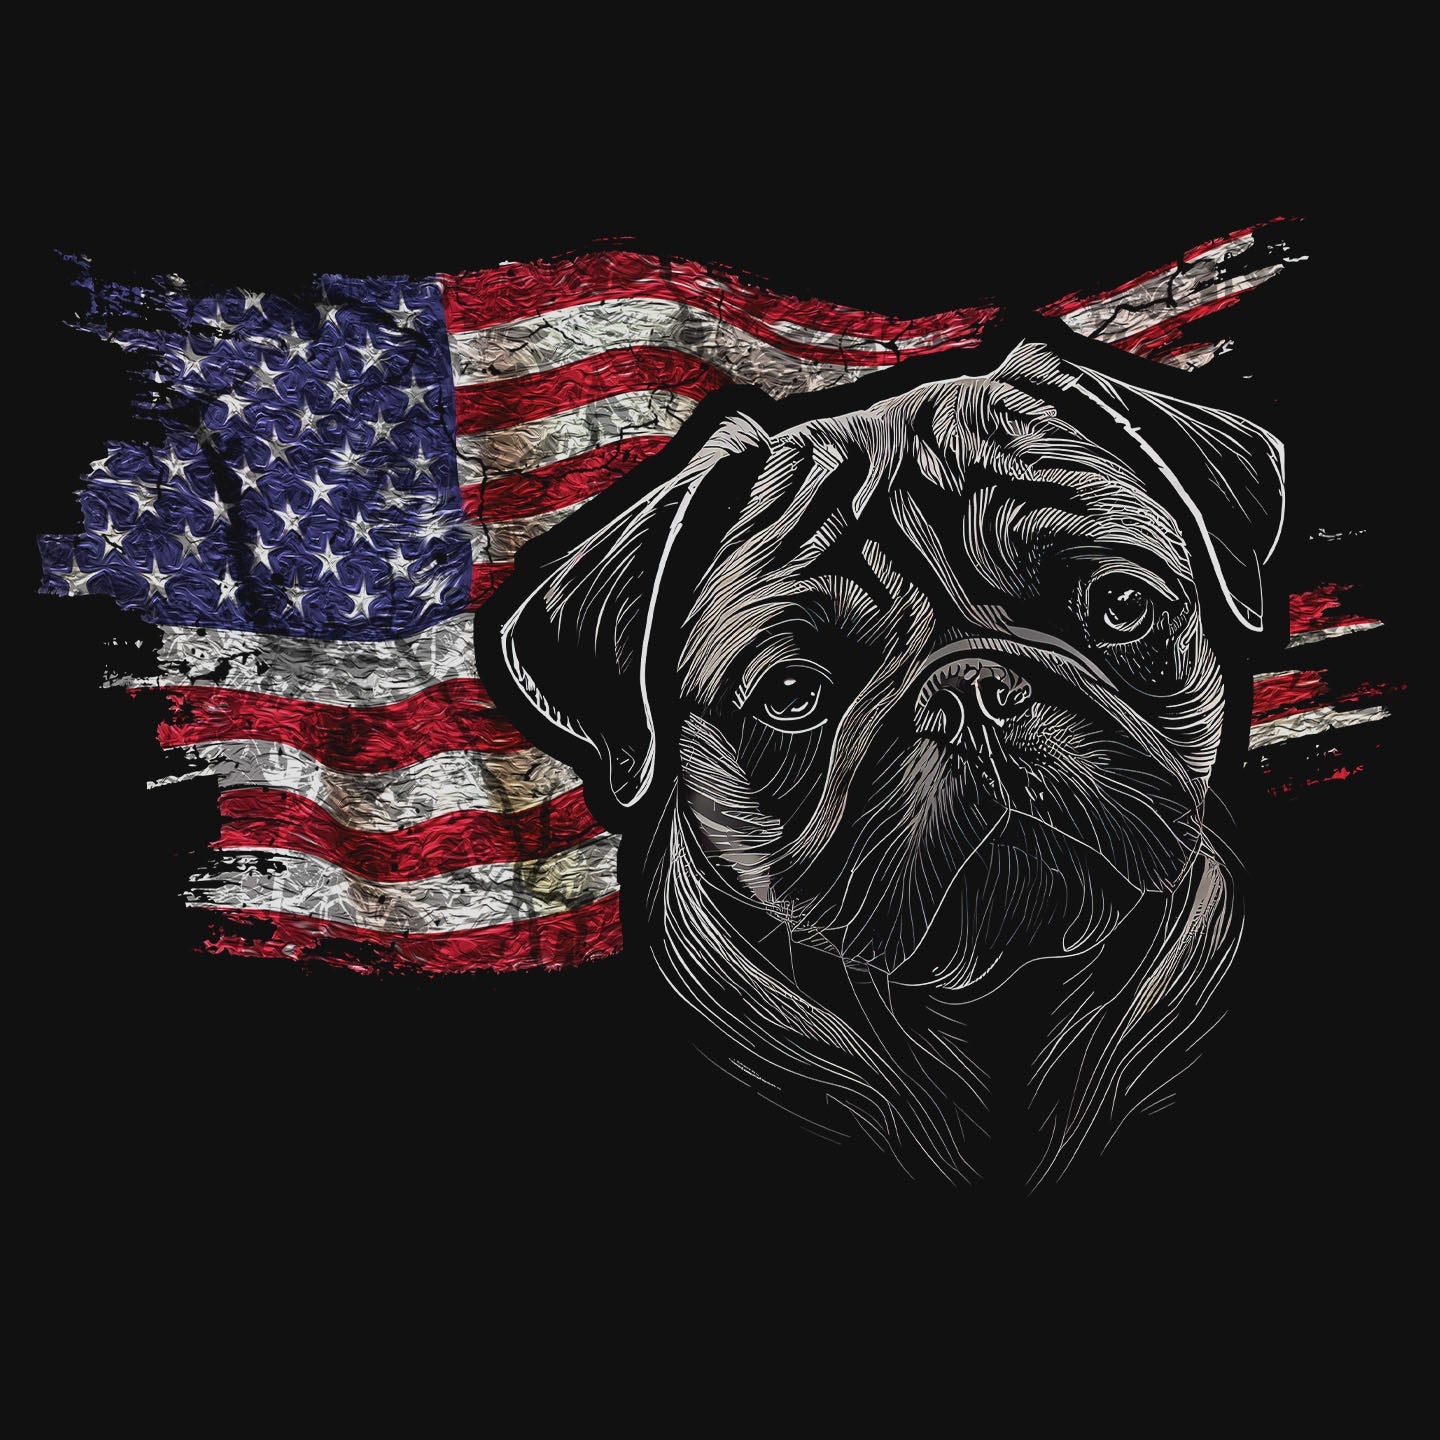 Patriotic Pug American Flag - Women's V-Neck T-Shirt